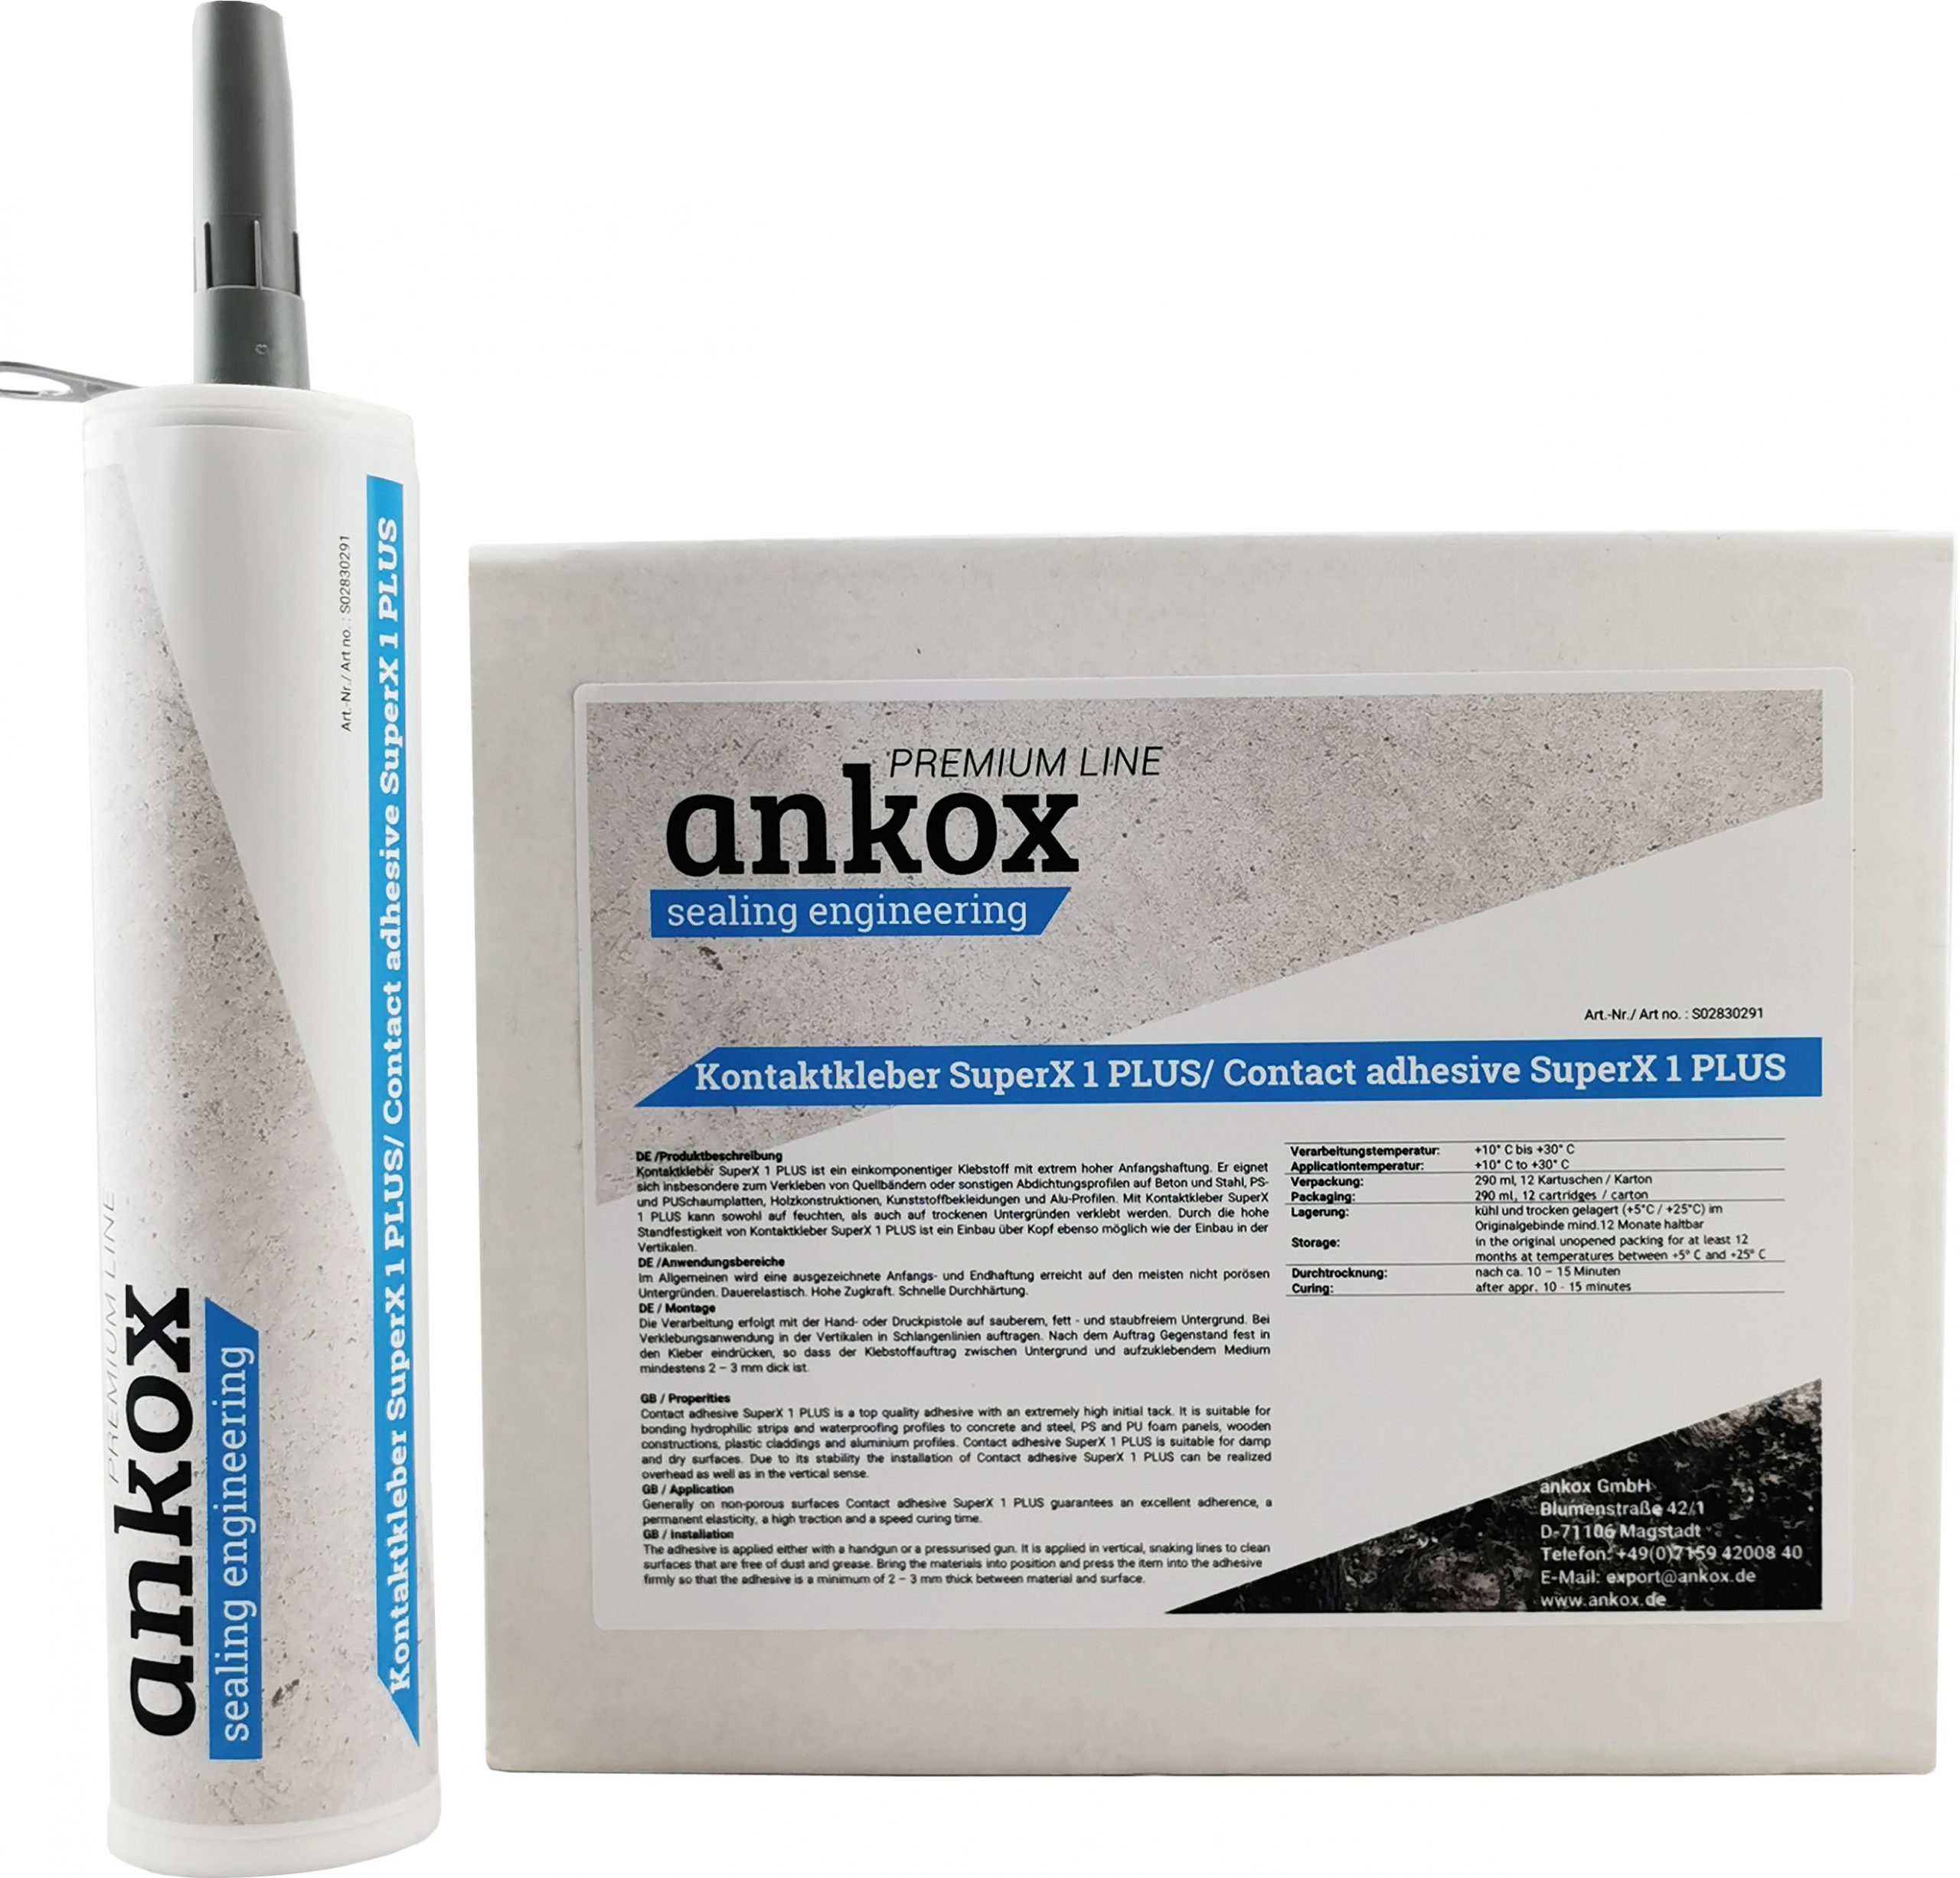 Ankox 1